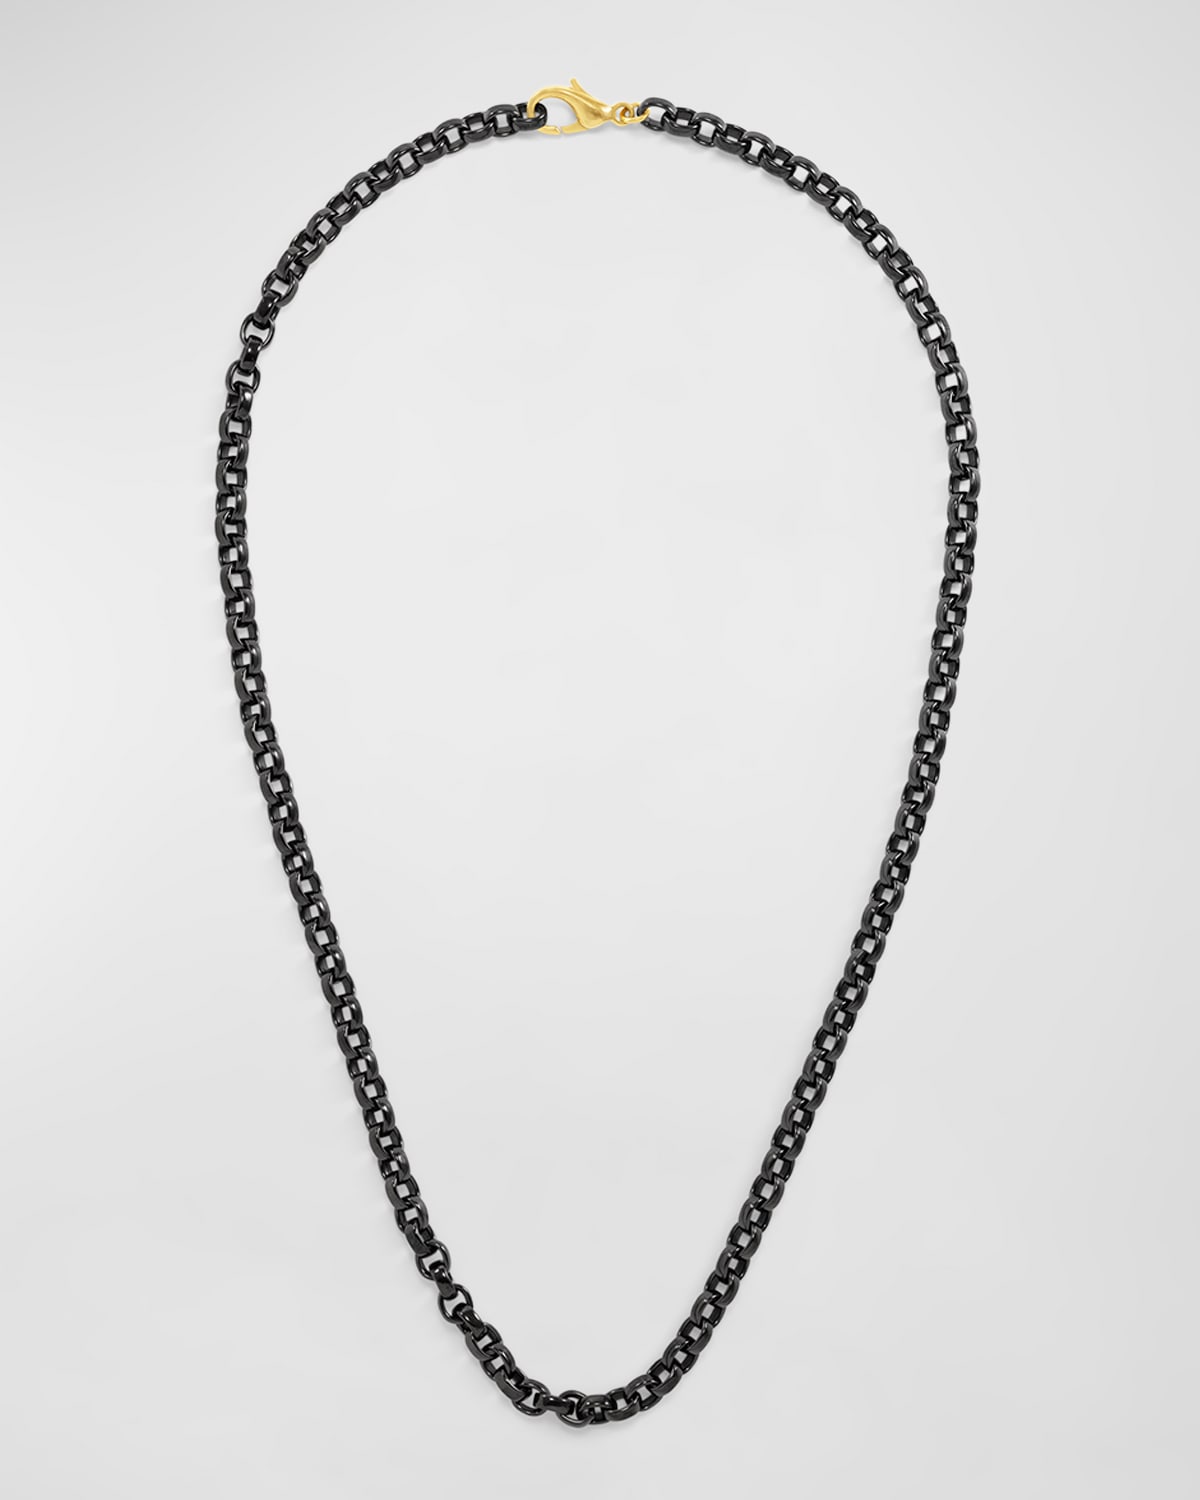 Jorge Adeler Men's Black Stainless Steel Chain Necklace, 20"l